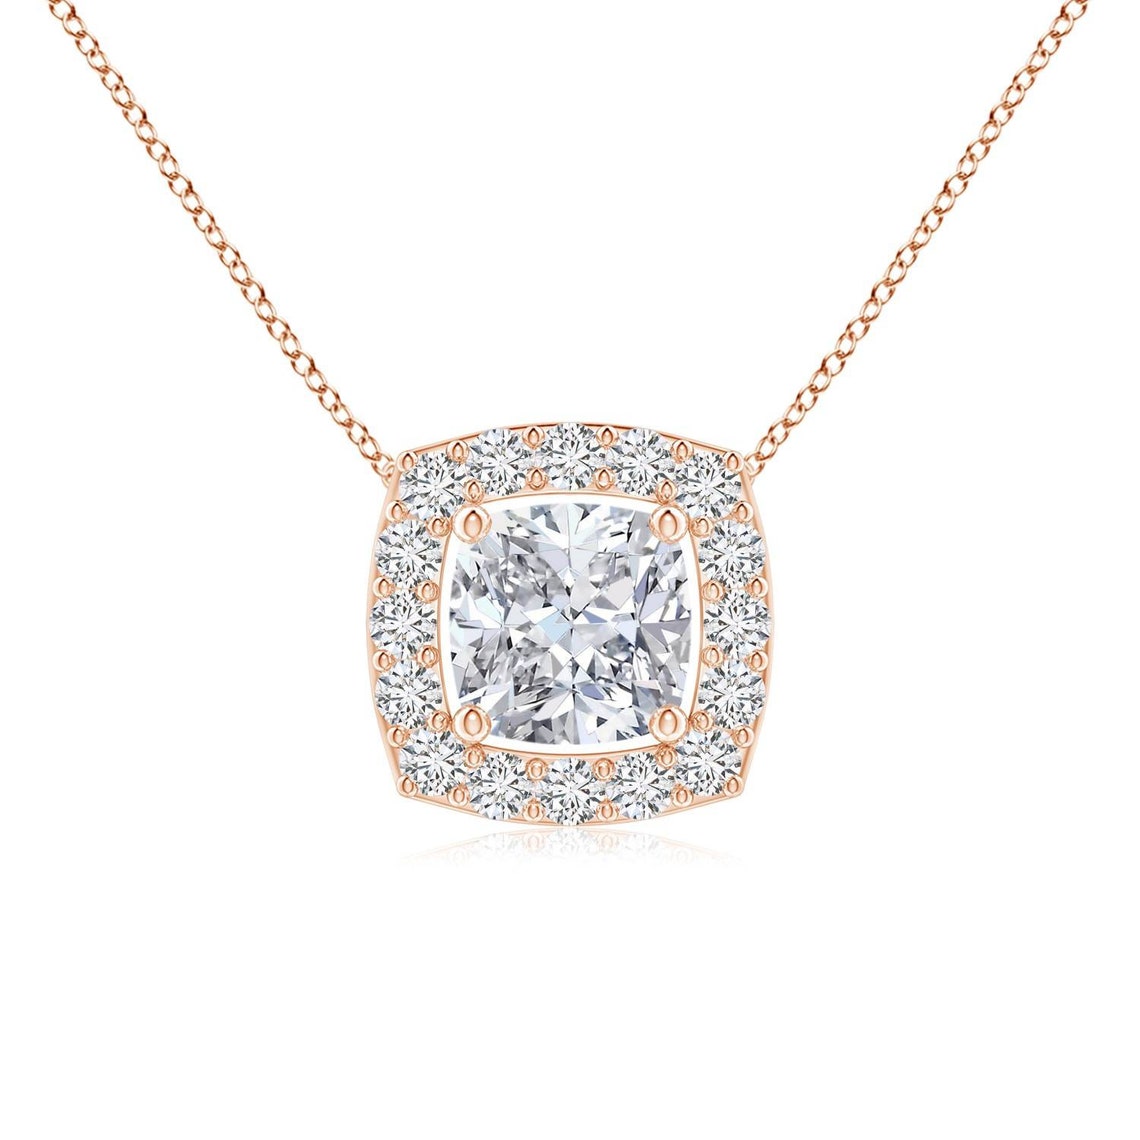 Cushion Diamond Necklace 14k Gold Diamond Necklace Gold | Etsy